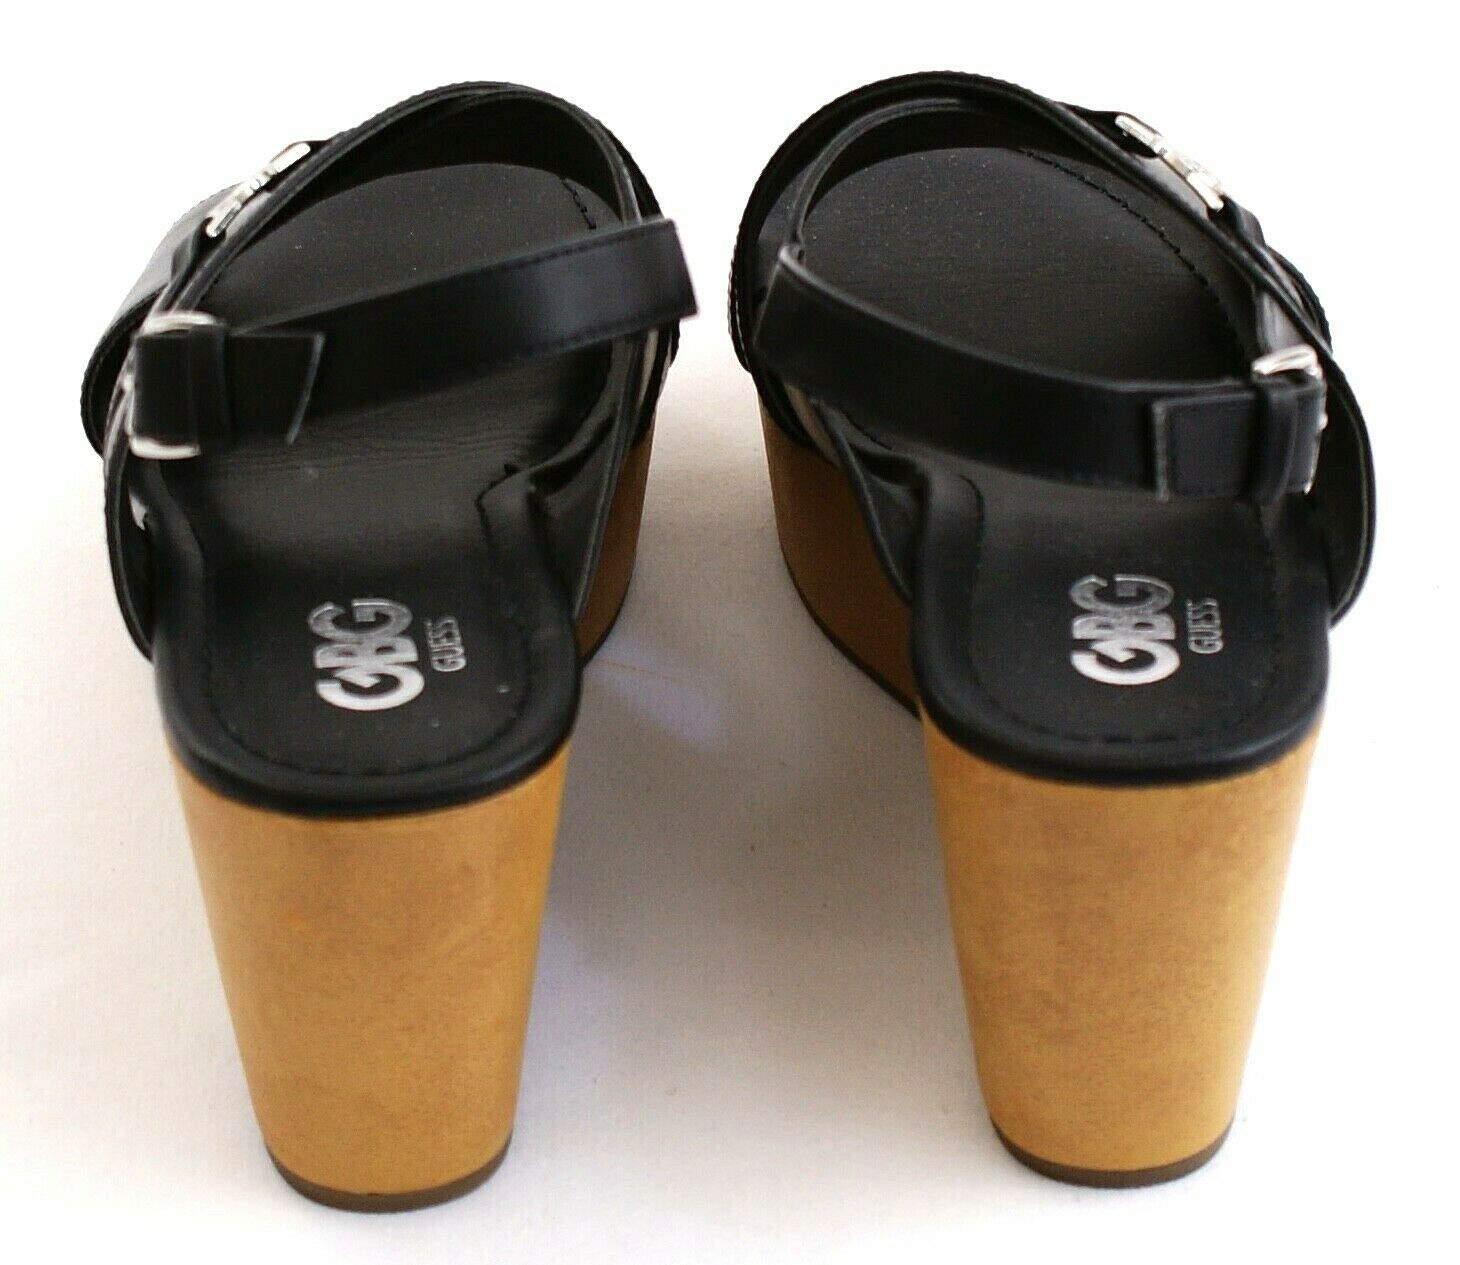 GBG Guess Black Open Toe Wedge Sandals Shoes Women's NEW - Women's Shoes